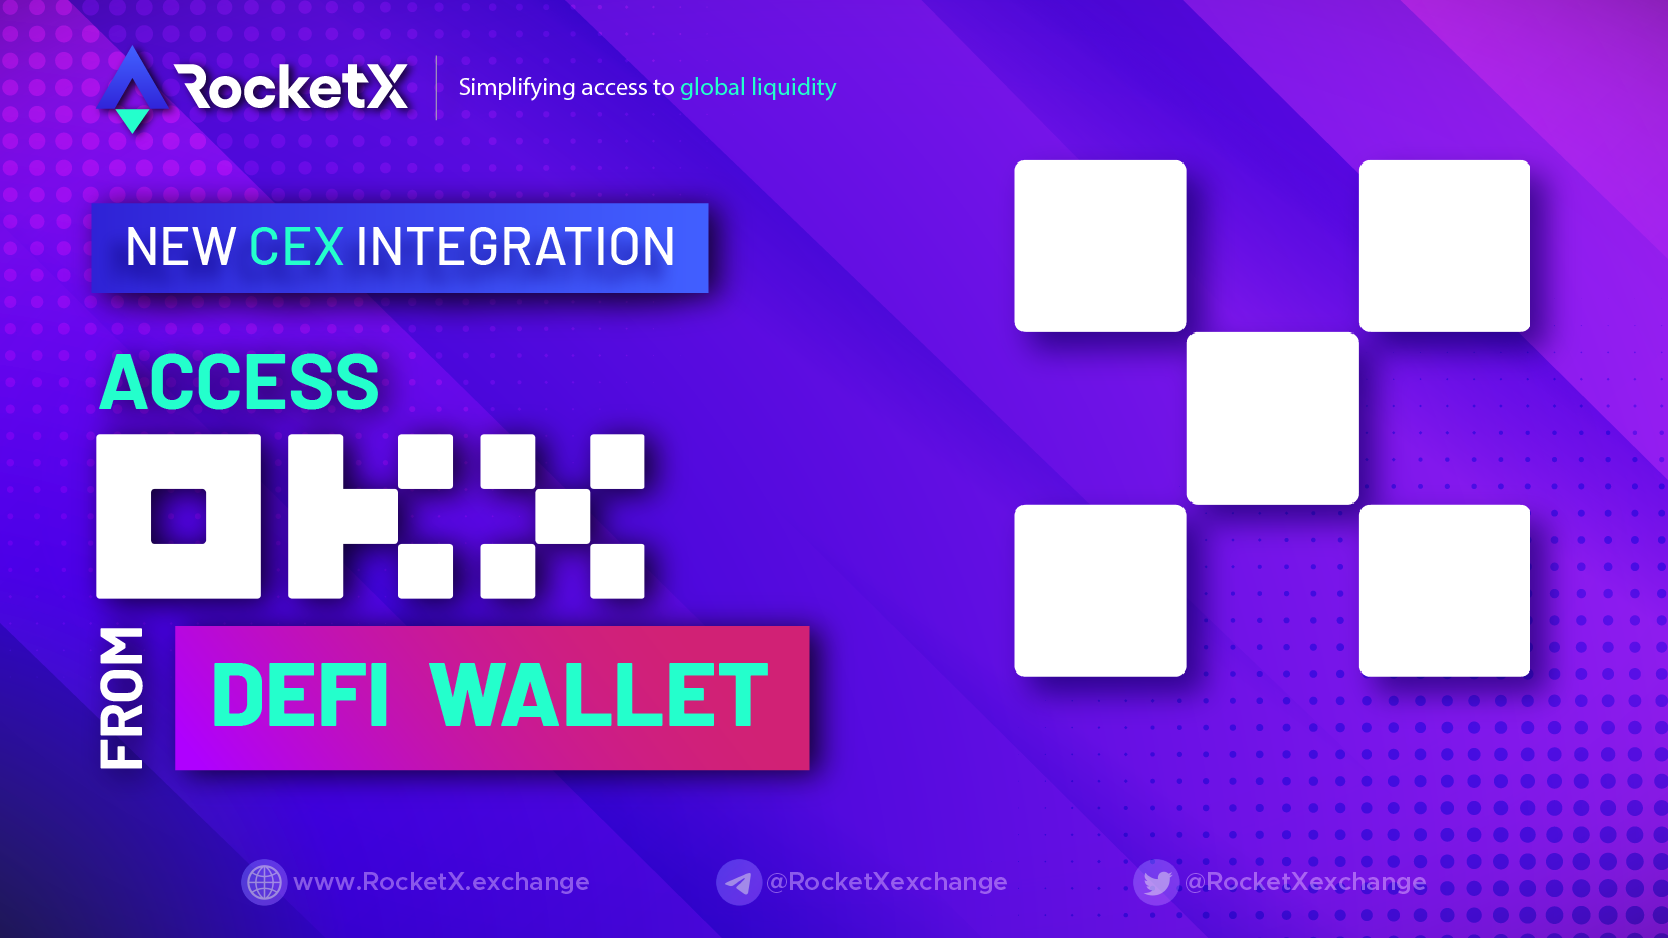 OKX Exchange Goes LIVE on RocketX. Crypto Traders Can Access OKX Via DeFi Wallets like MetaMask, Trust Wallet & more